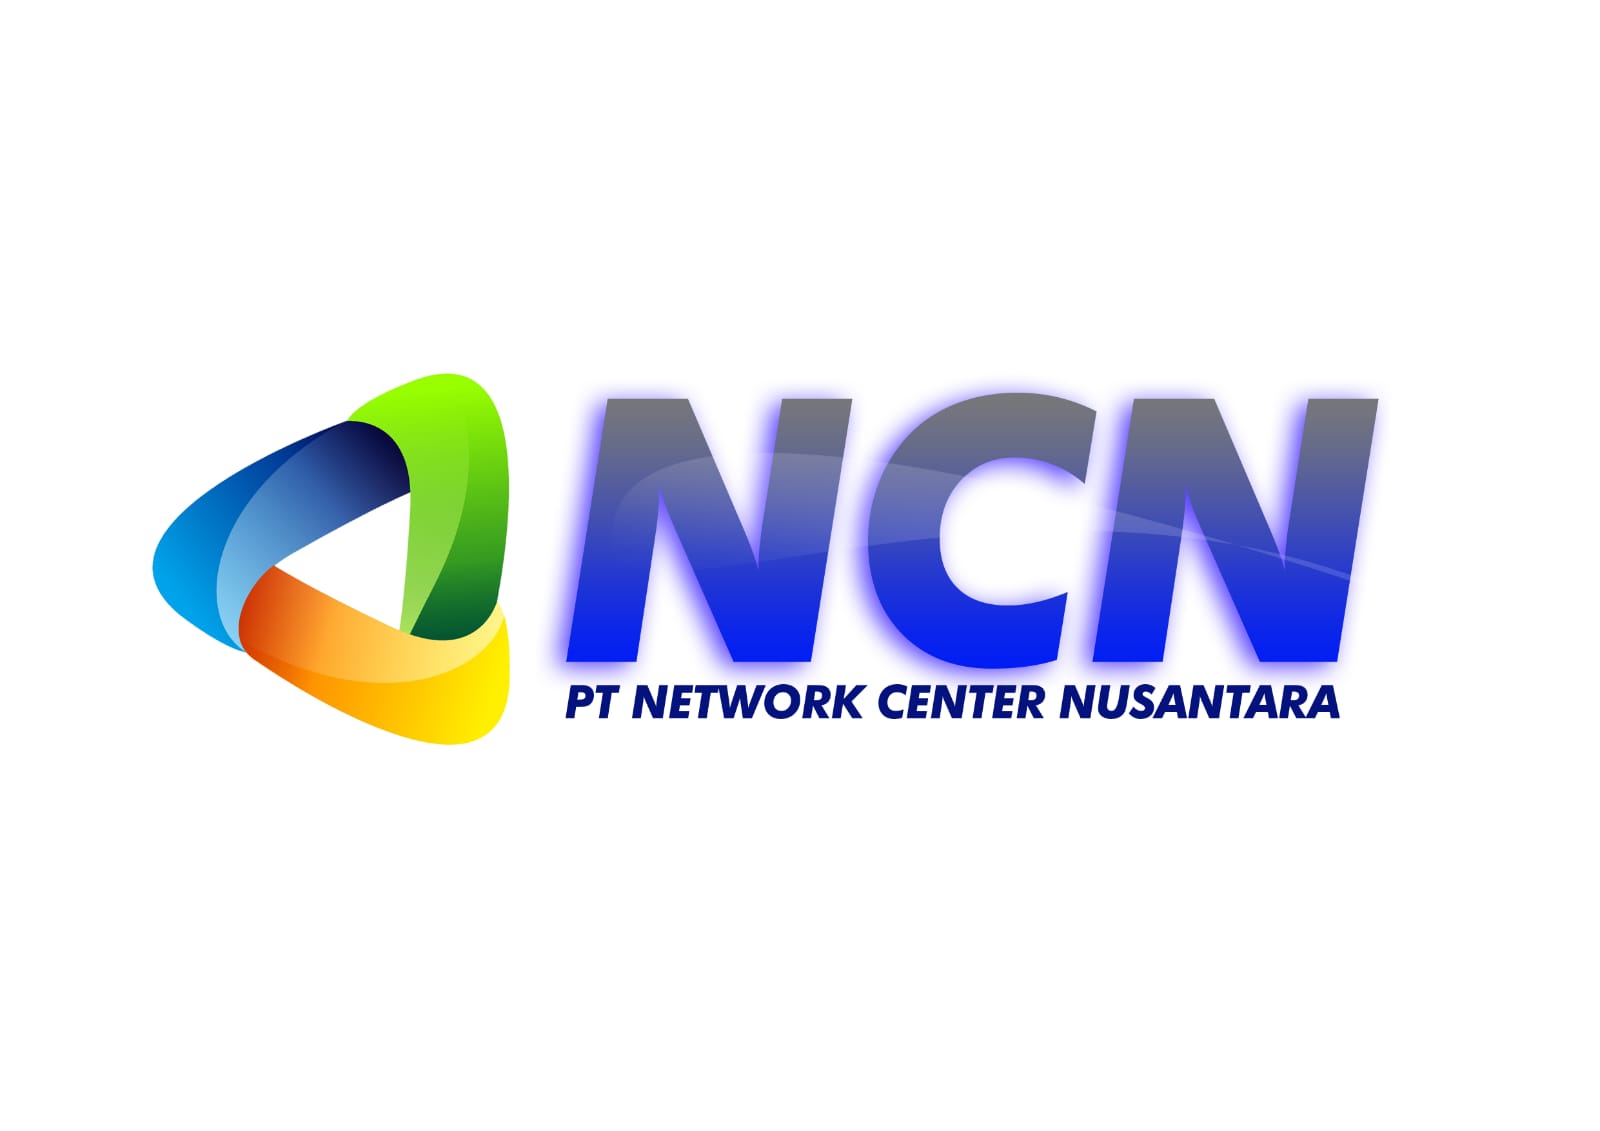 PT. NETWORK CENTER NUSANTARA